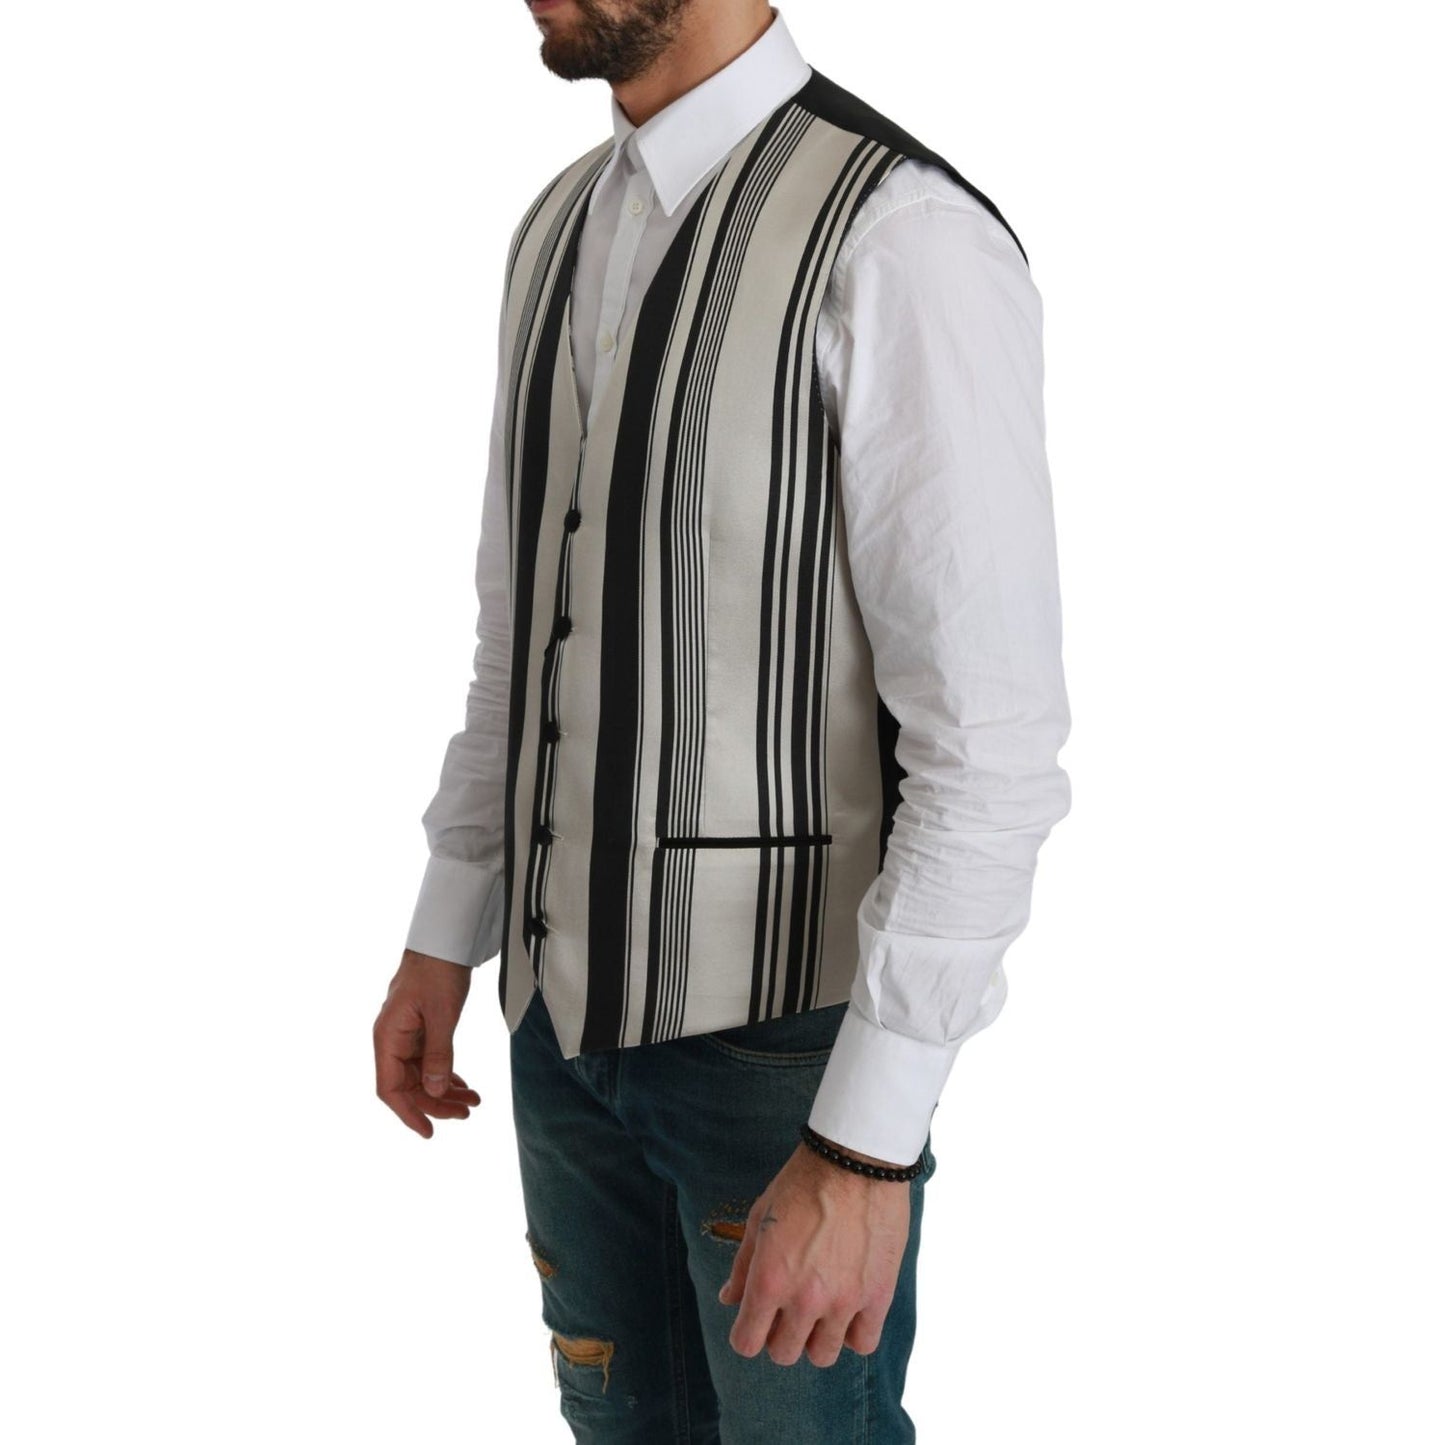 Dolce & Gabbana Stripe Cotton Silk Dress Vest white-black-stripes-waistcoat-formal-vest IMG_0342-scaled-c16269f2-3c1.jpg